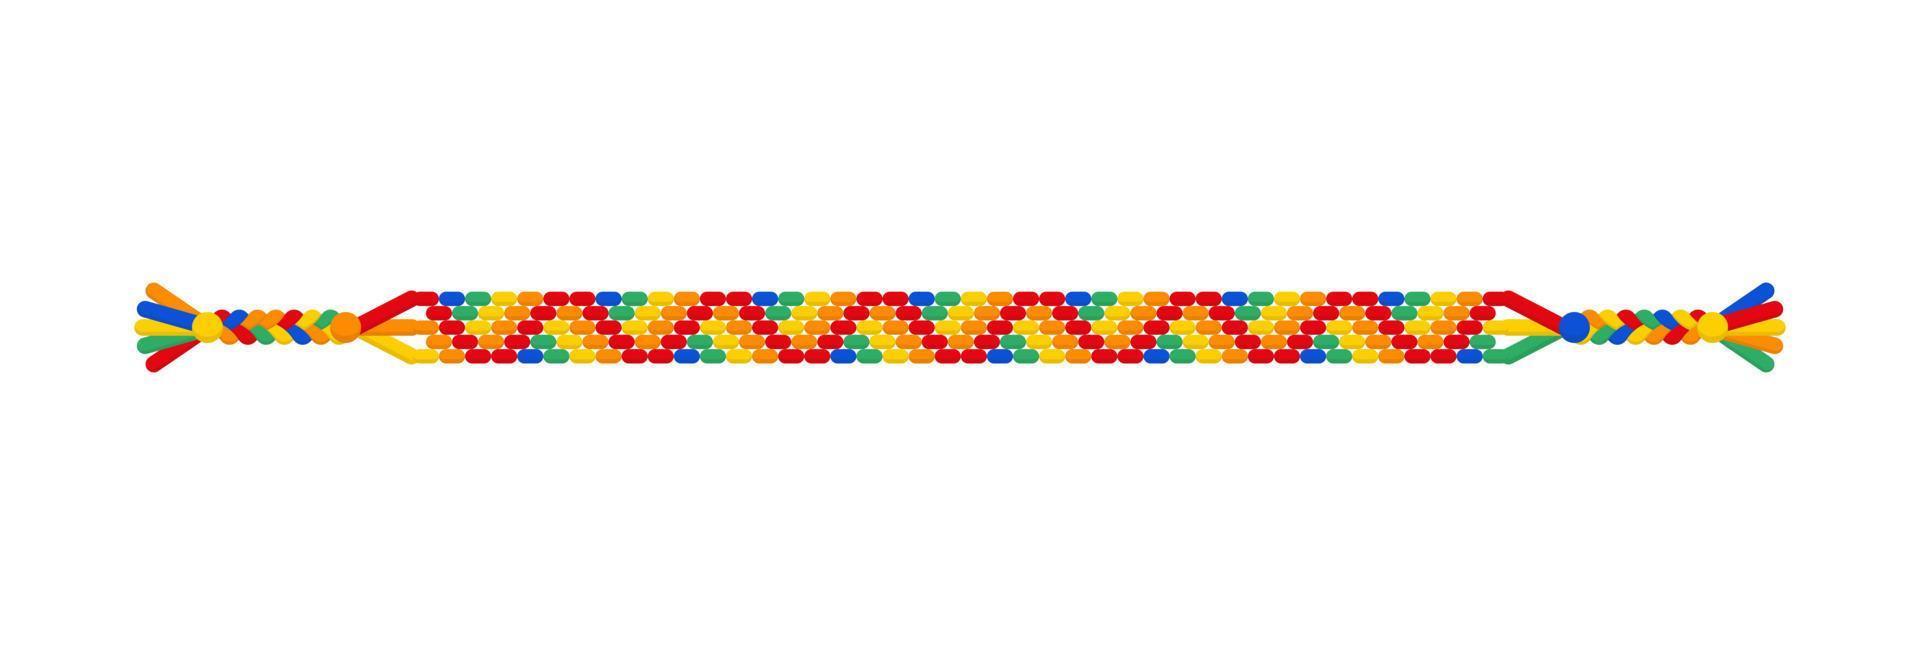 Vector rainbow lgbt triangle hippie friendship bracelet of threads.